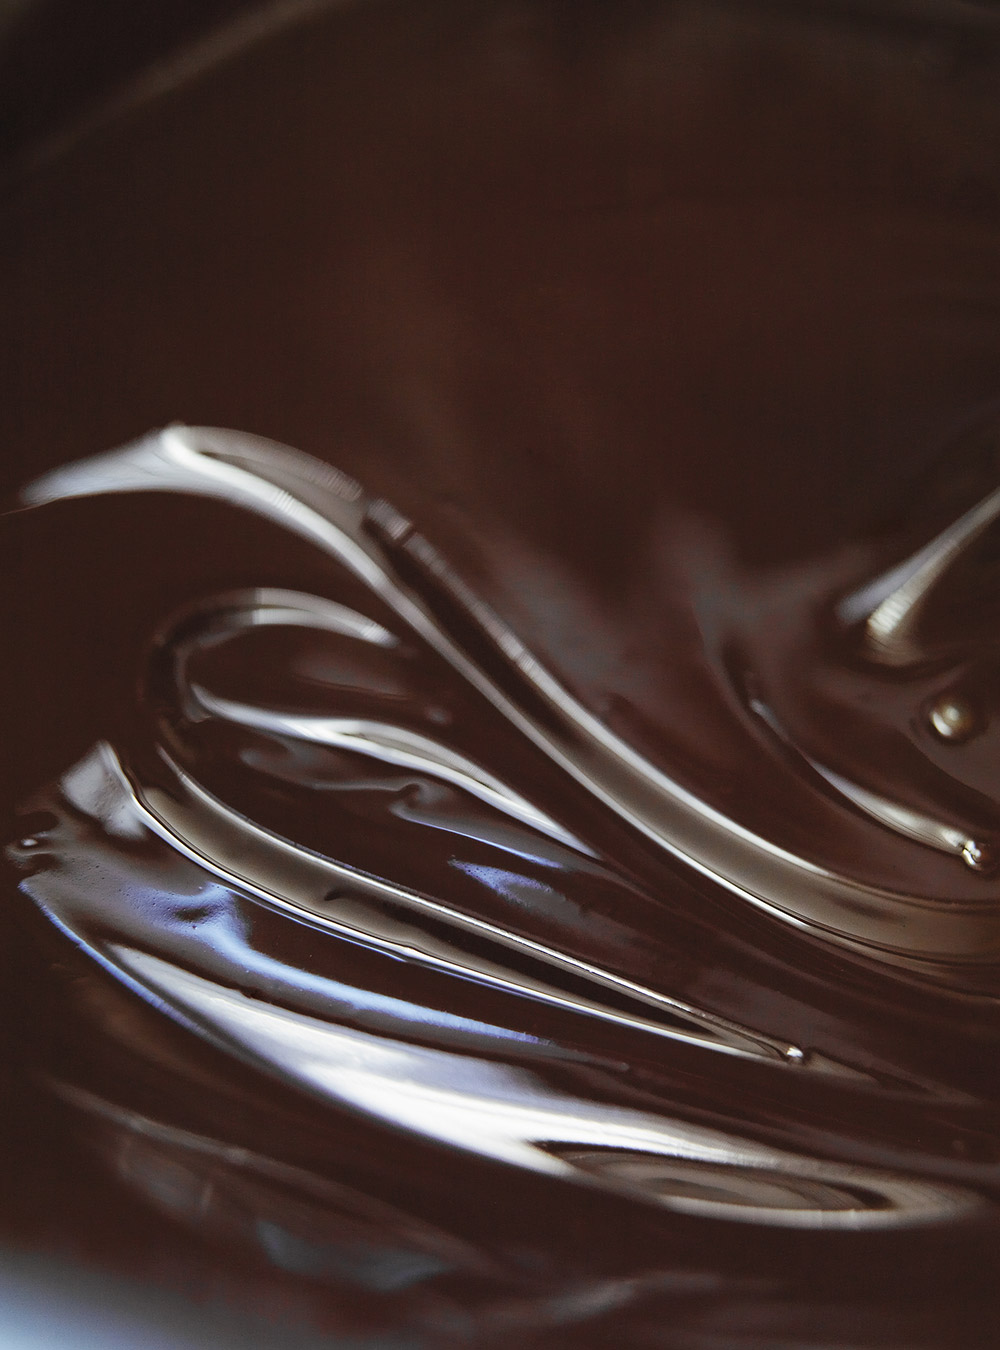 Chocolate–Almond Spread